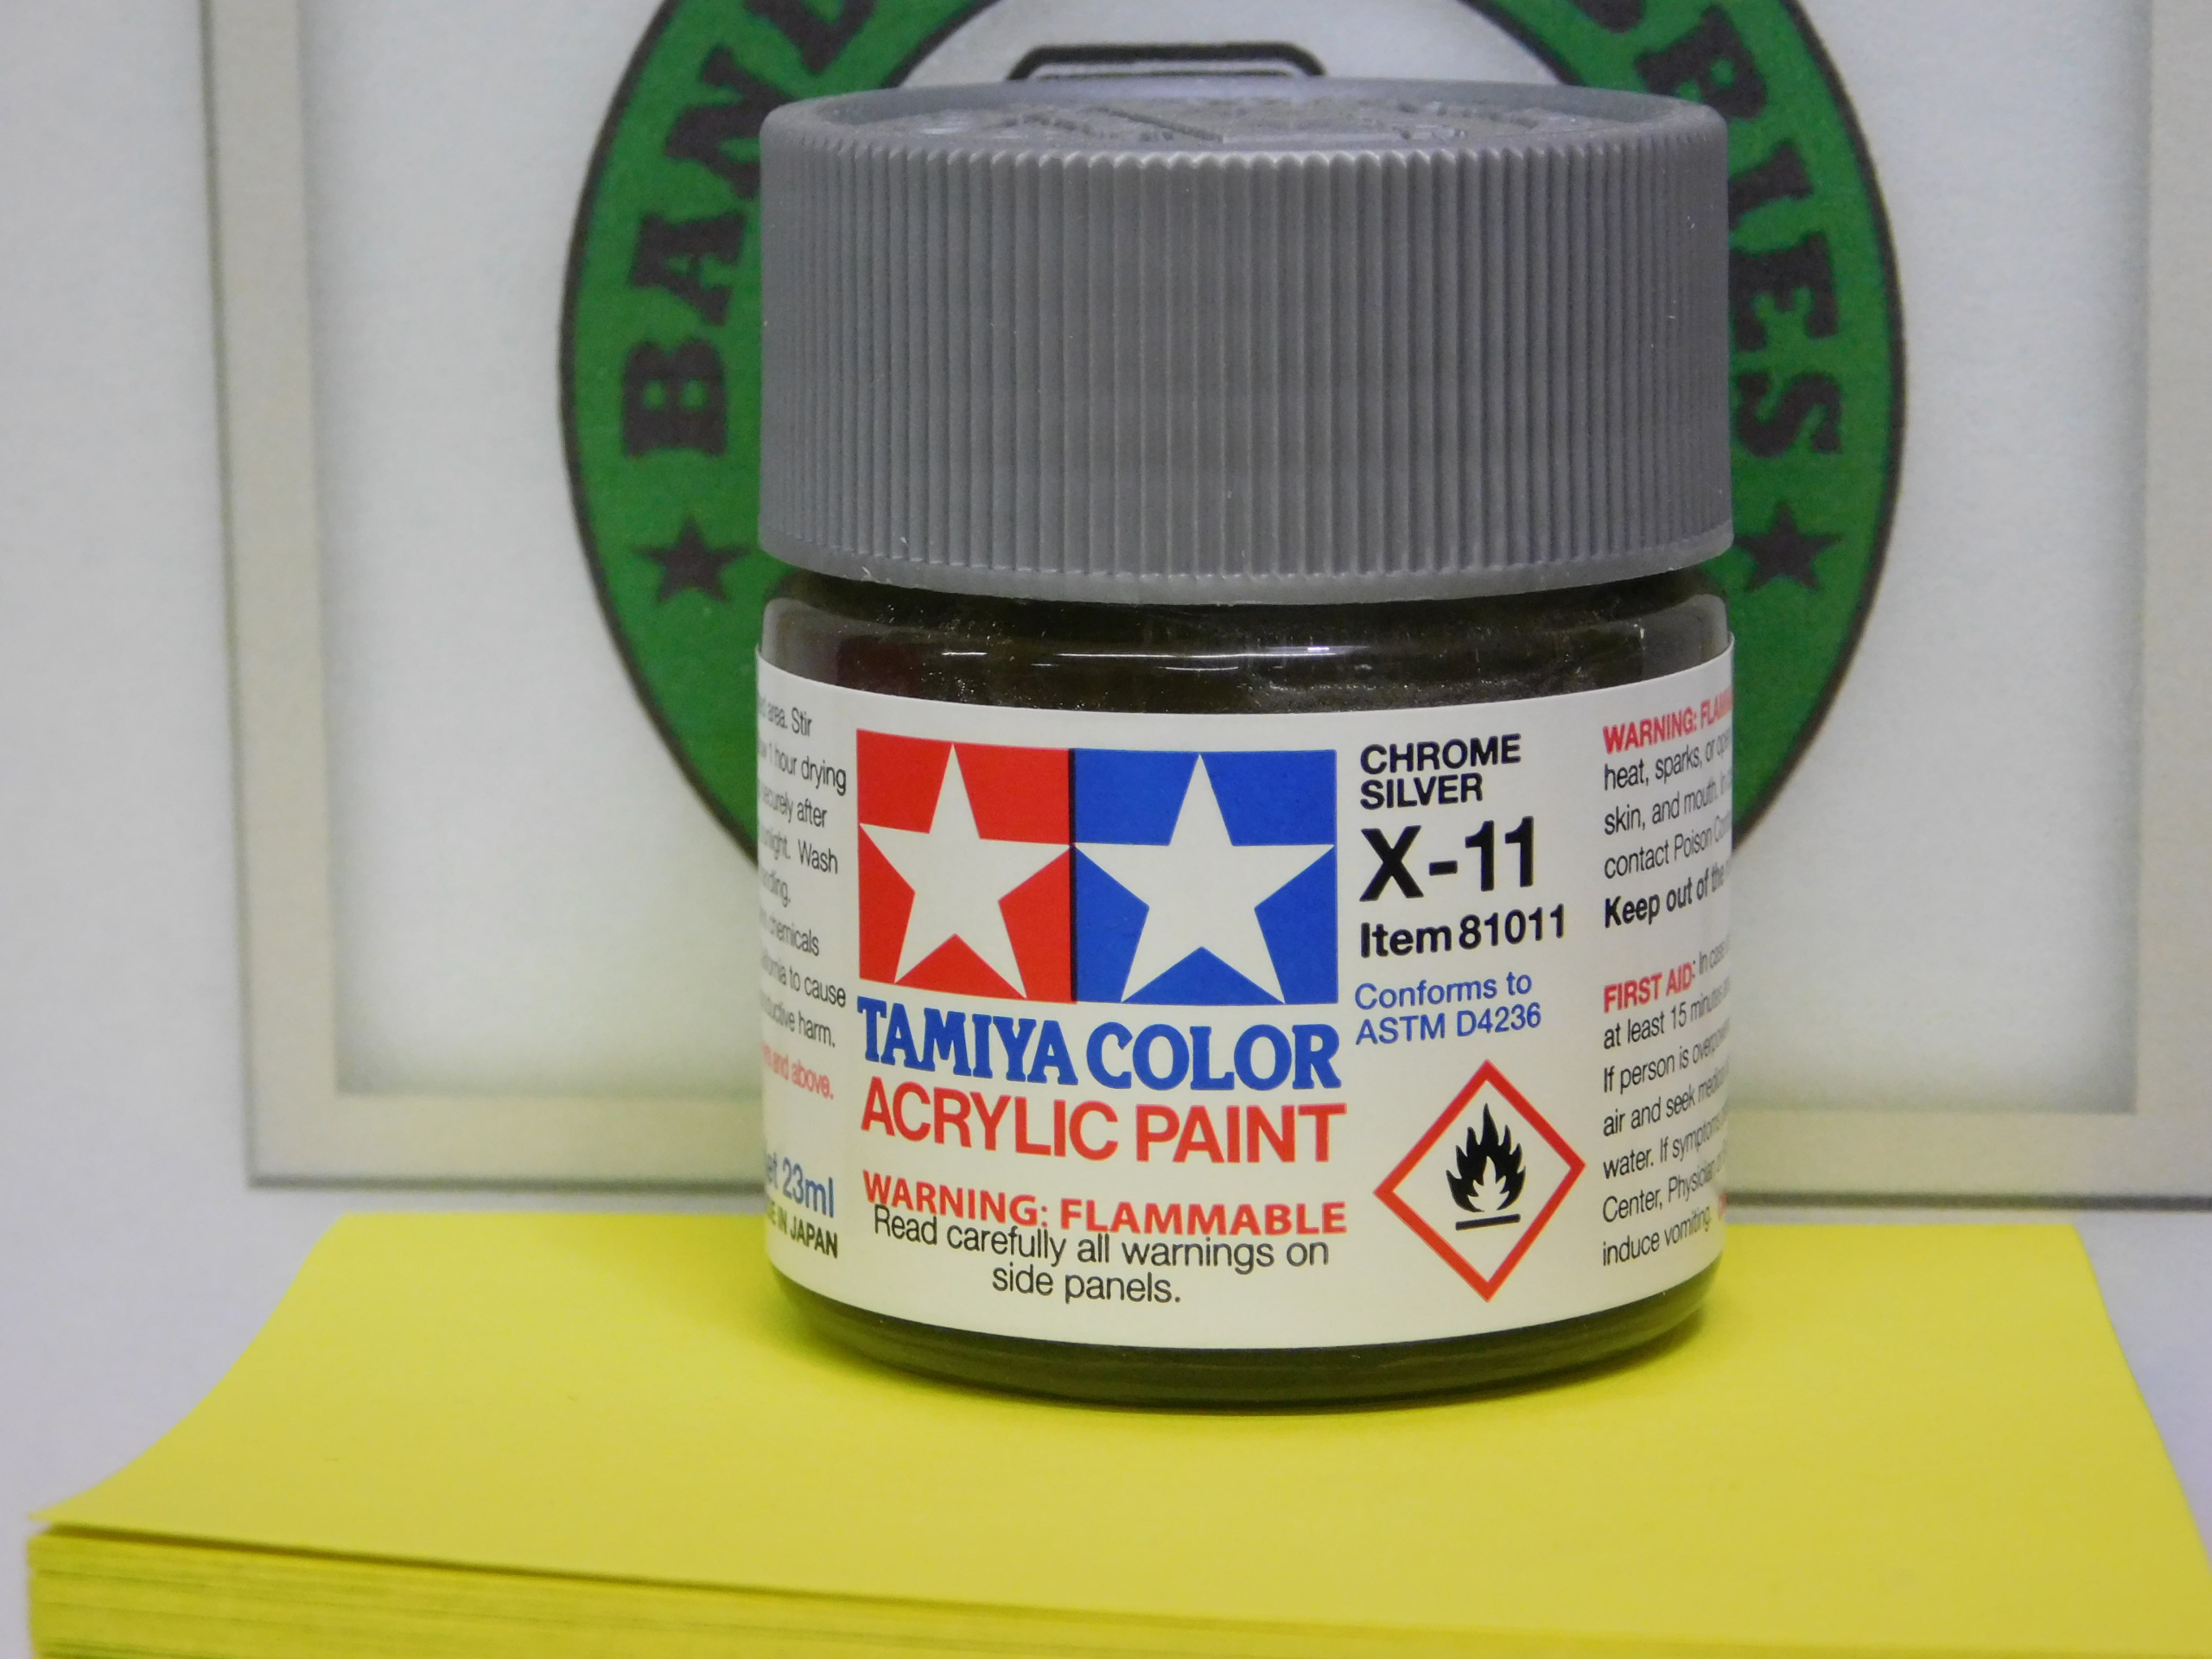 Tamiya X-11 Gloss CHROME SILVER Acrylic Paint, 23ml Bottle (TAM81011)